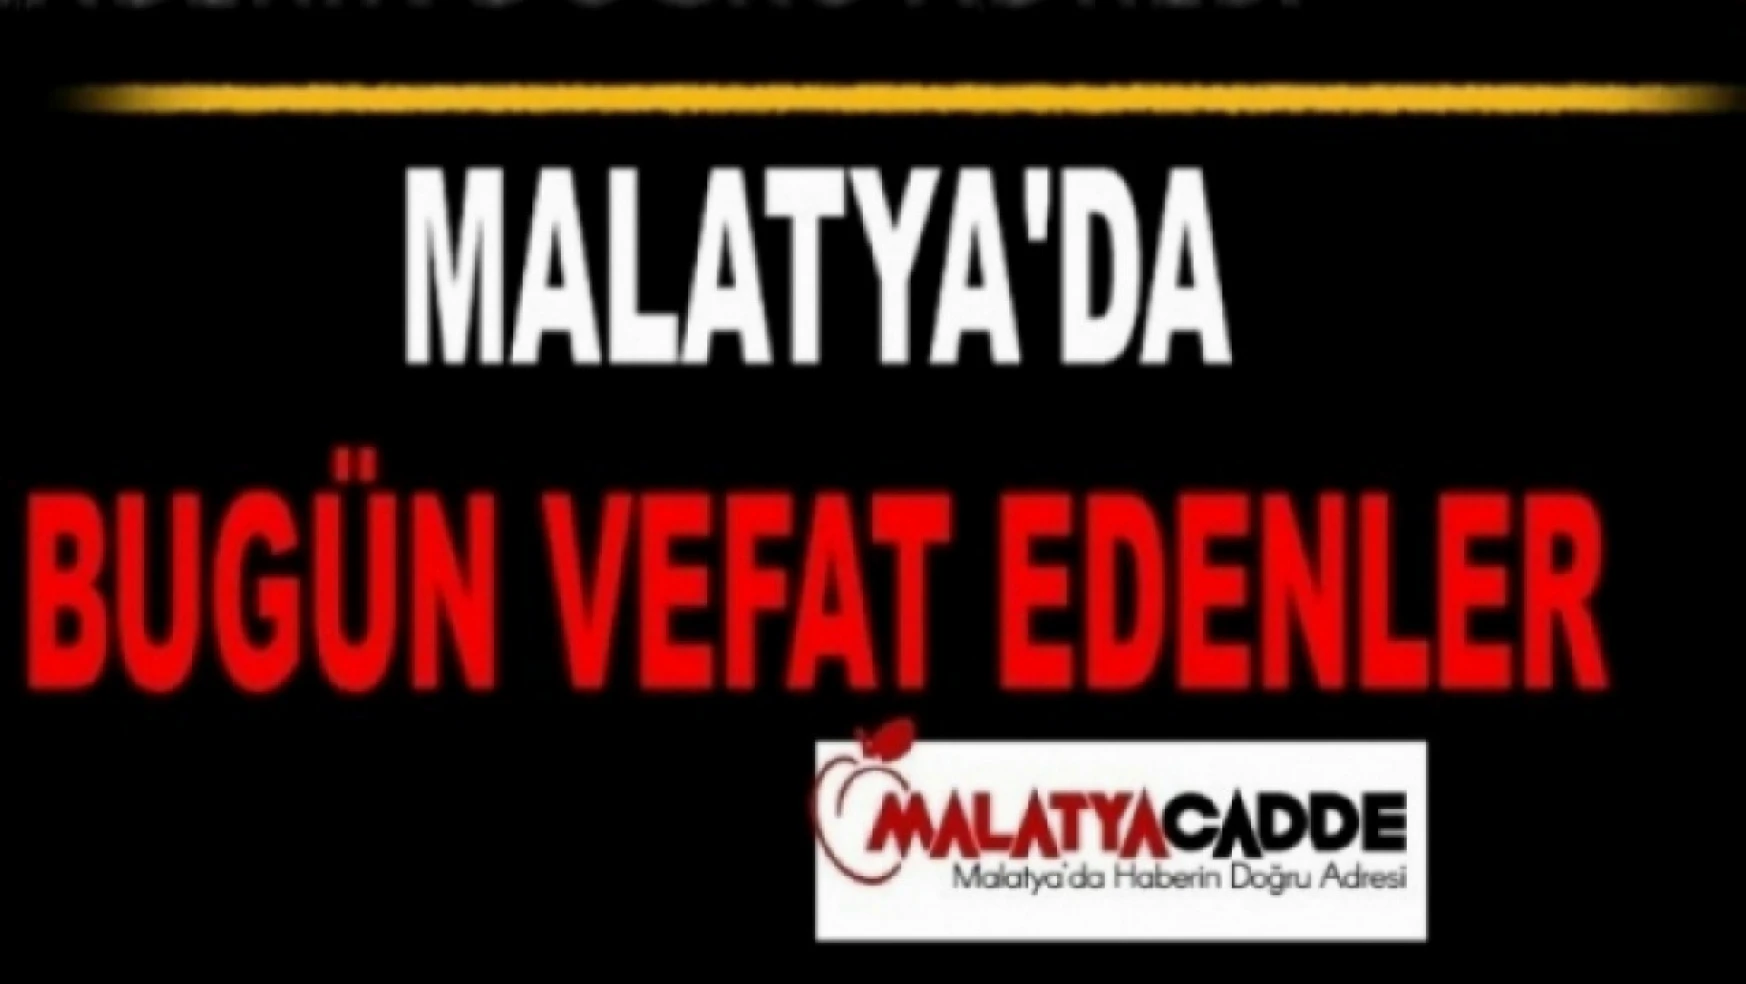 Malatya'da Bugün Vefat Edenler